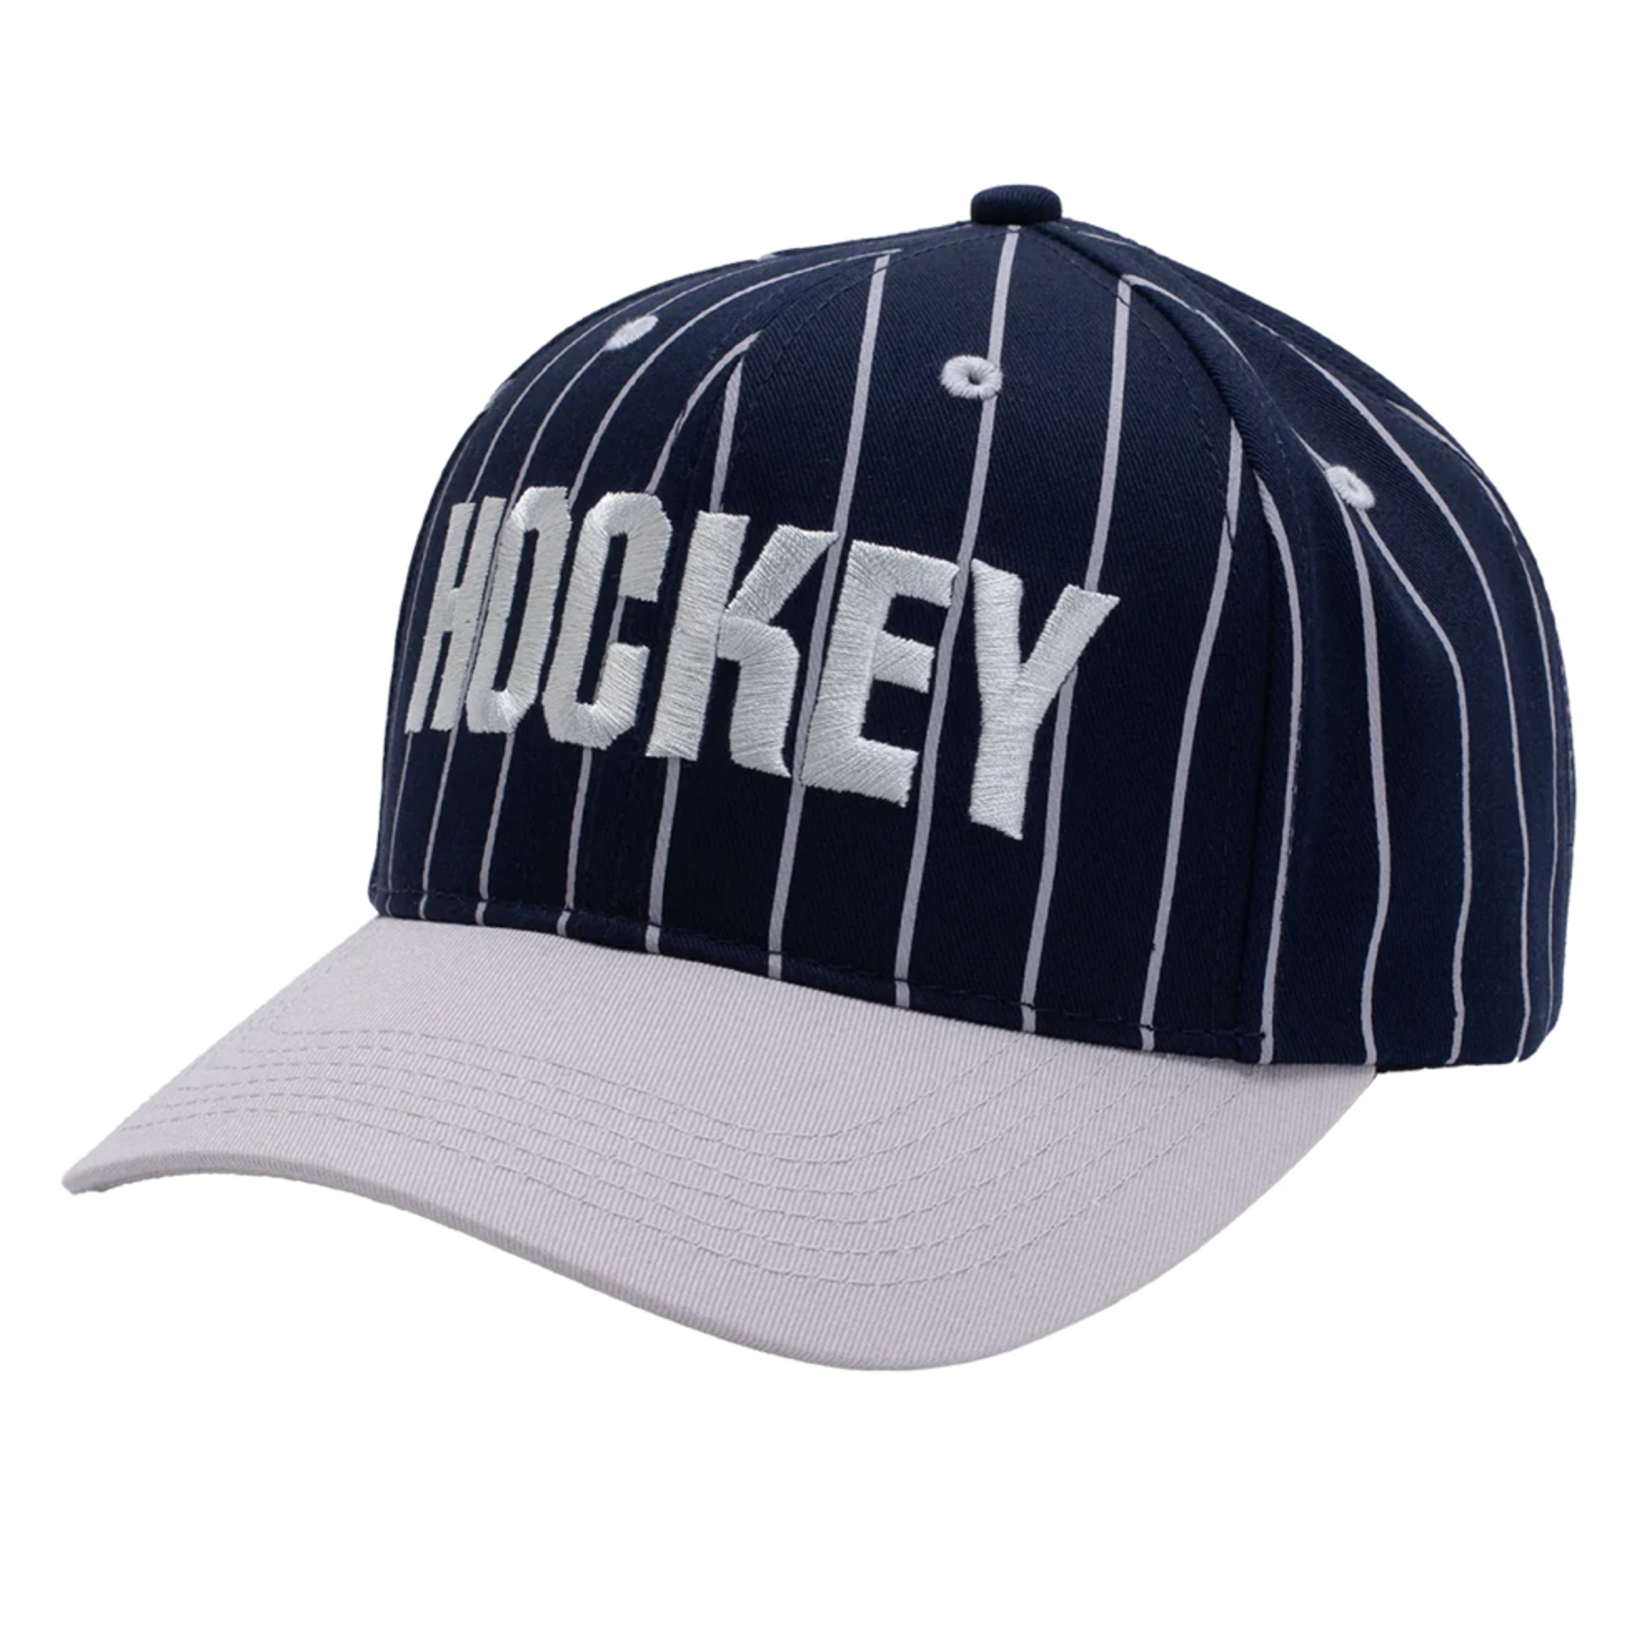 HOCKEY HOCKEY Hockey Pinstriped Hat